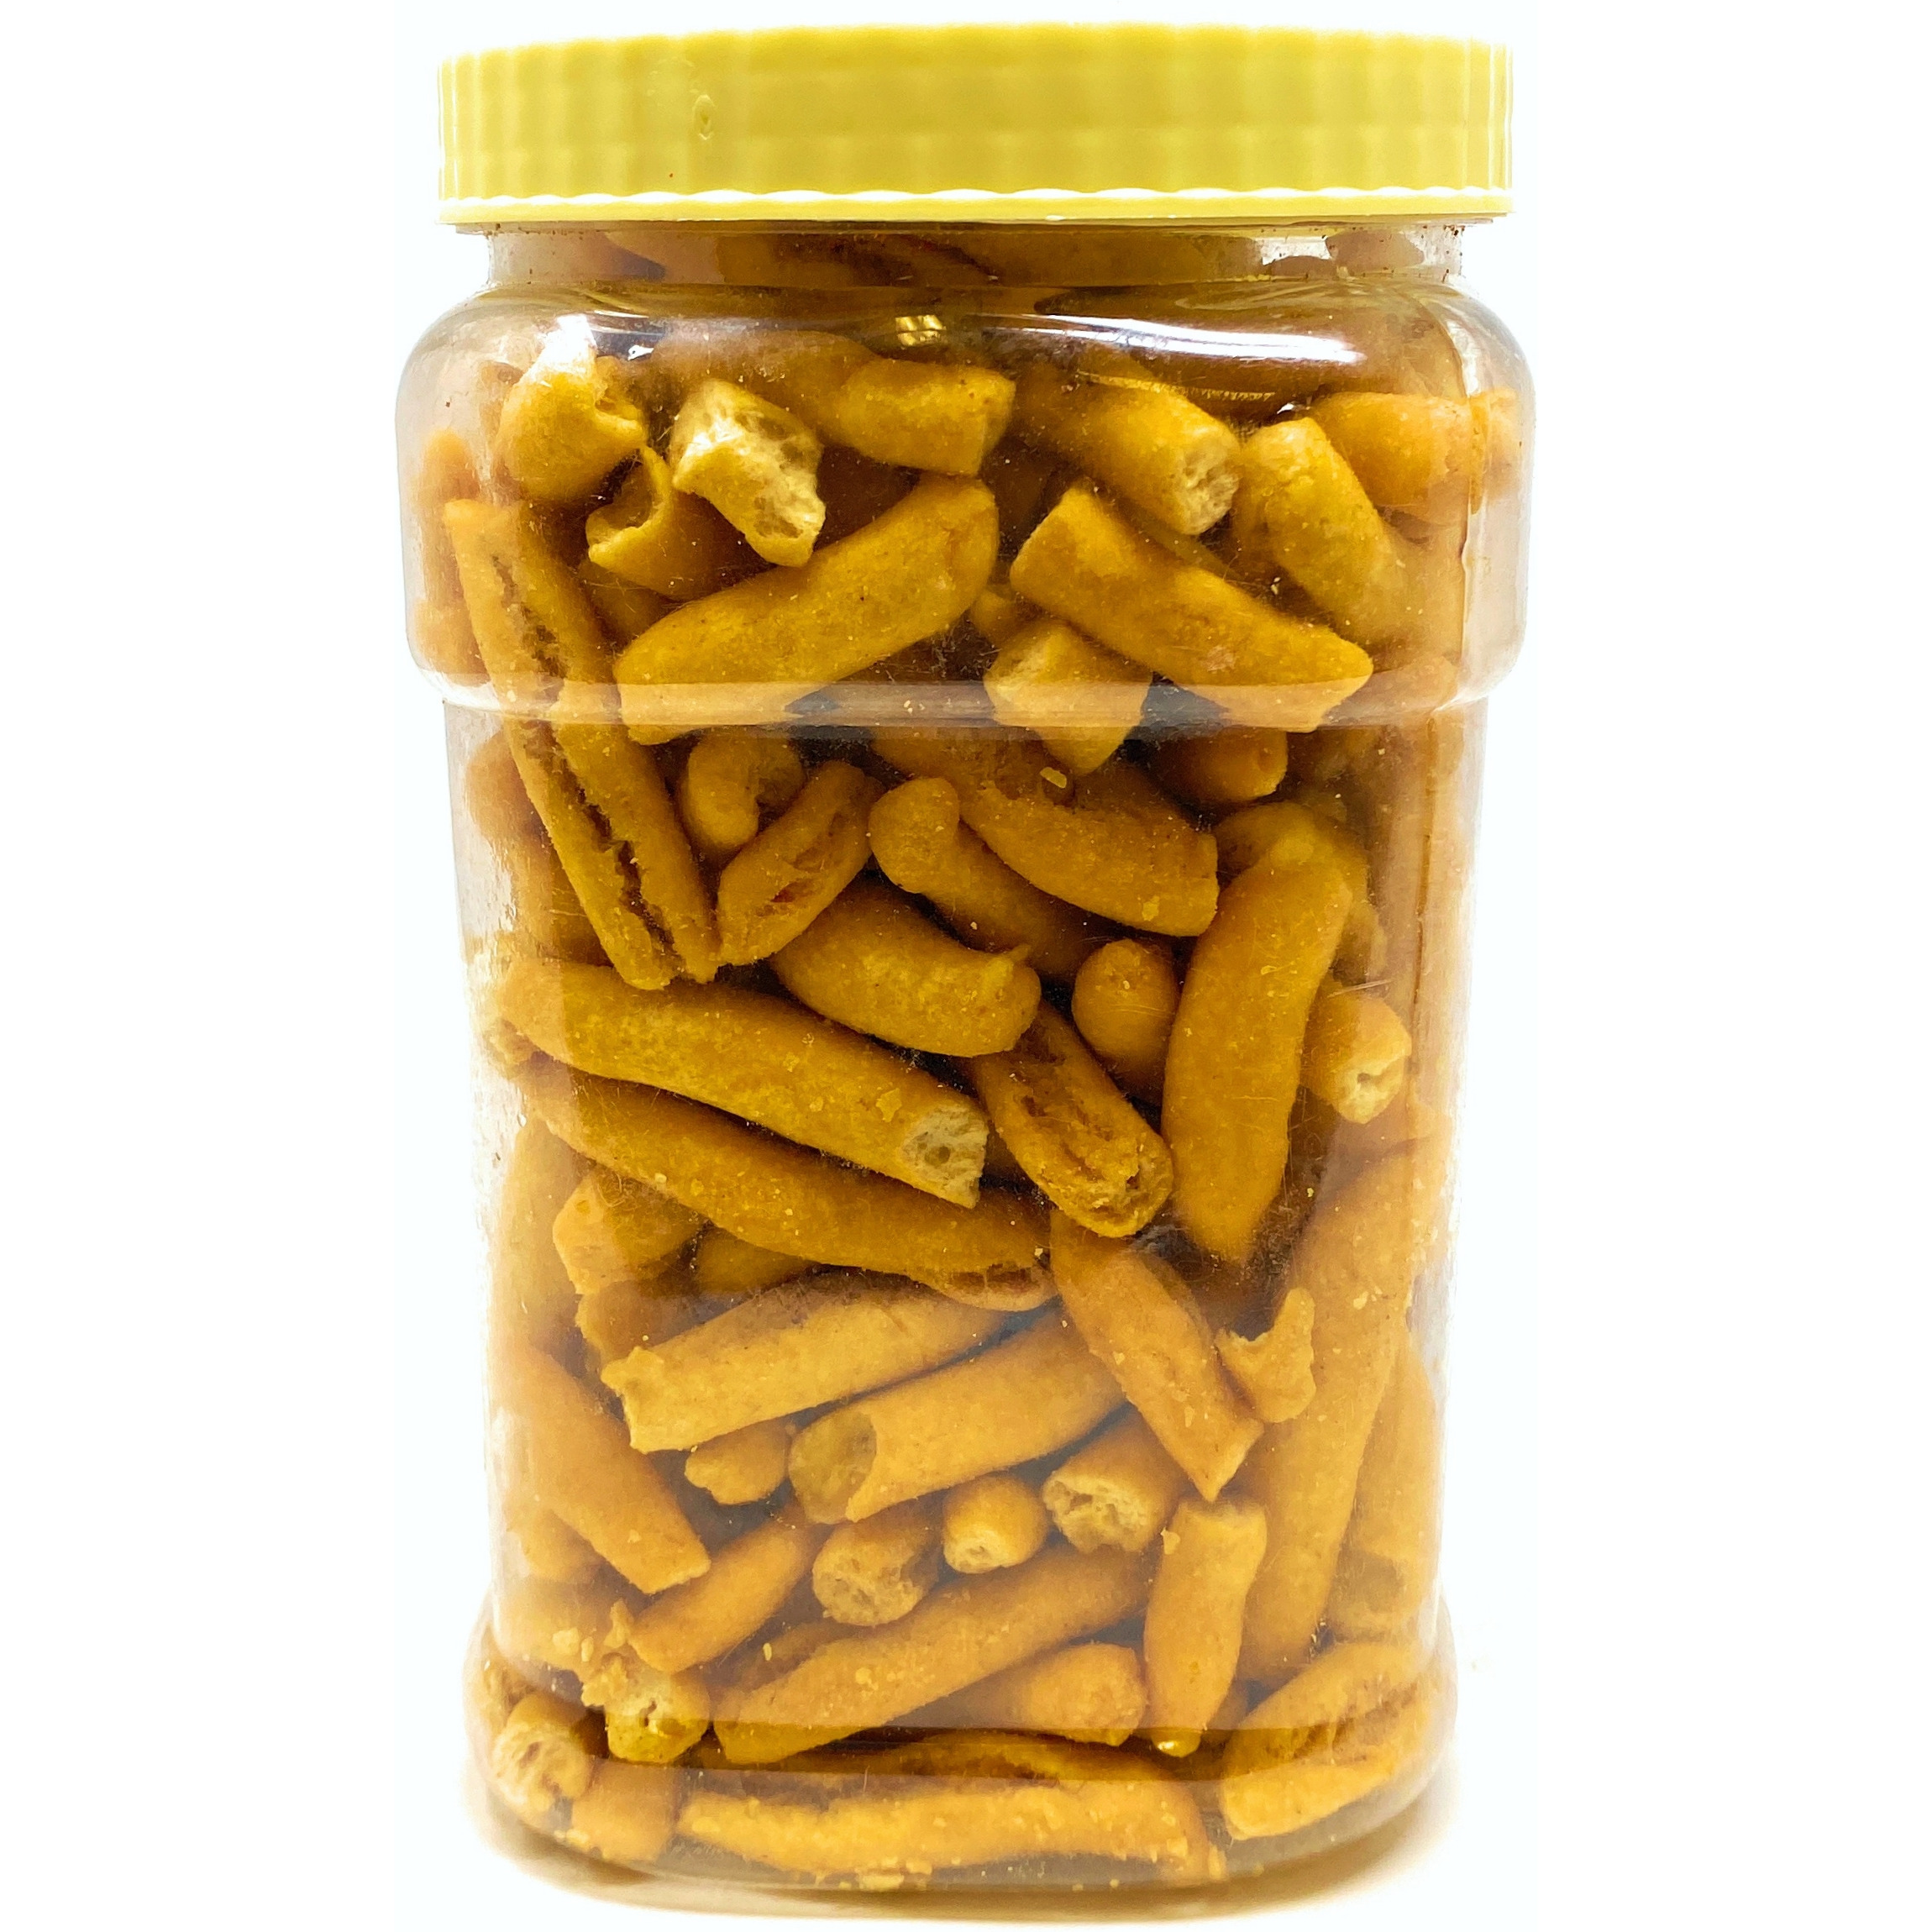 Rani Sabji Pakora 14oz (400g) PET Jar ~ Plain, Gluten Friendly ~ All Natural | Vegan | No Preservatives | No Colors | Indian Origin